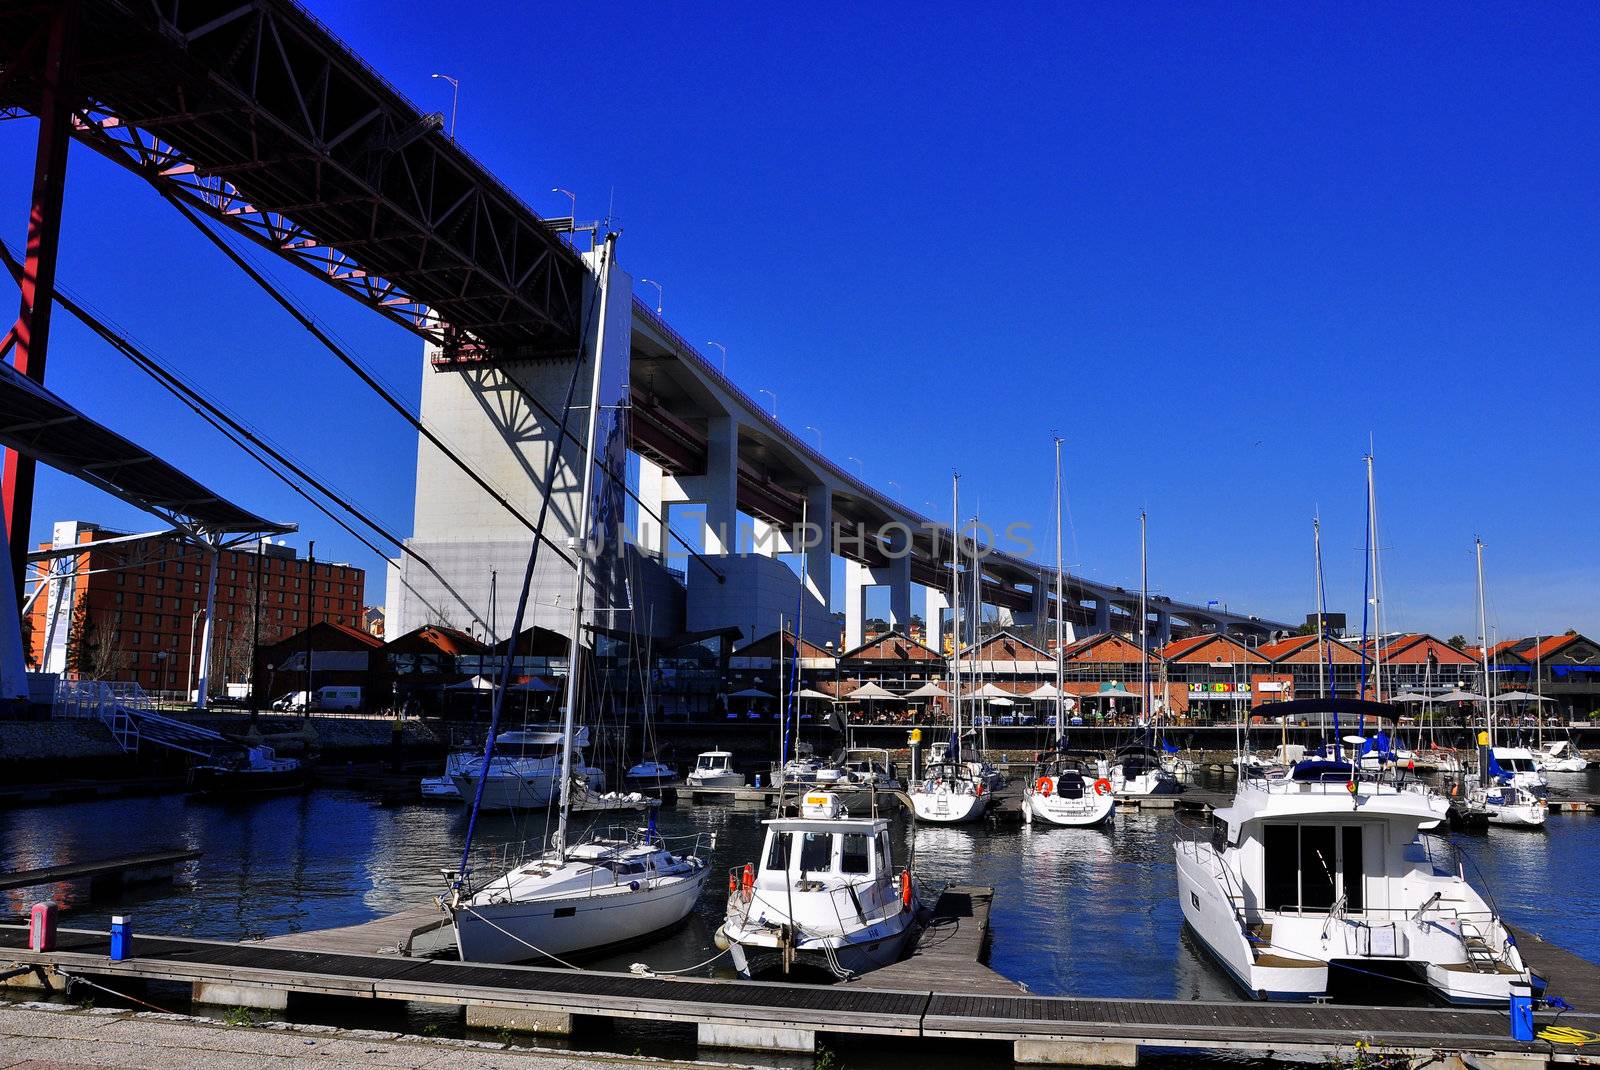  Cove marina, near the bridge on April 25 in Lisbon